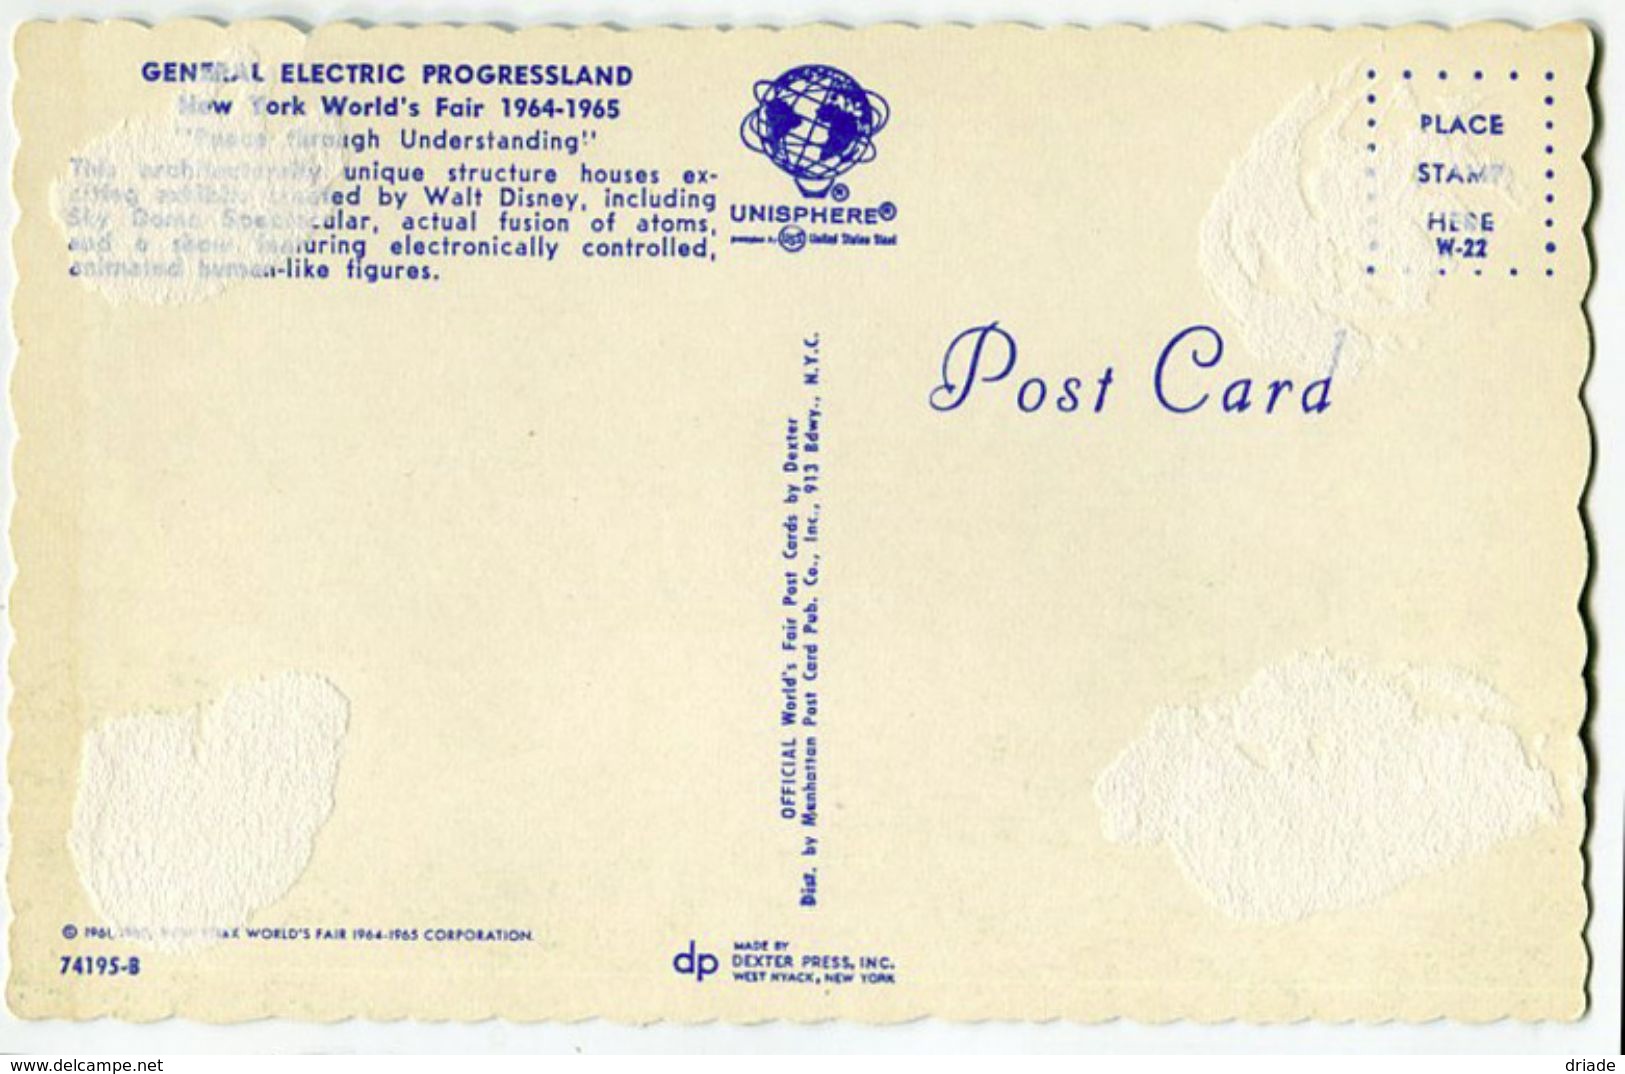 CARTOLINA NEW YORK WORLD'S FAIR GENERAL ELECTRIC PROGRESSLAND ANNO 1964 1965 - Polizia – Gendarmeria